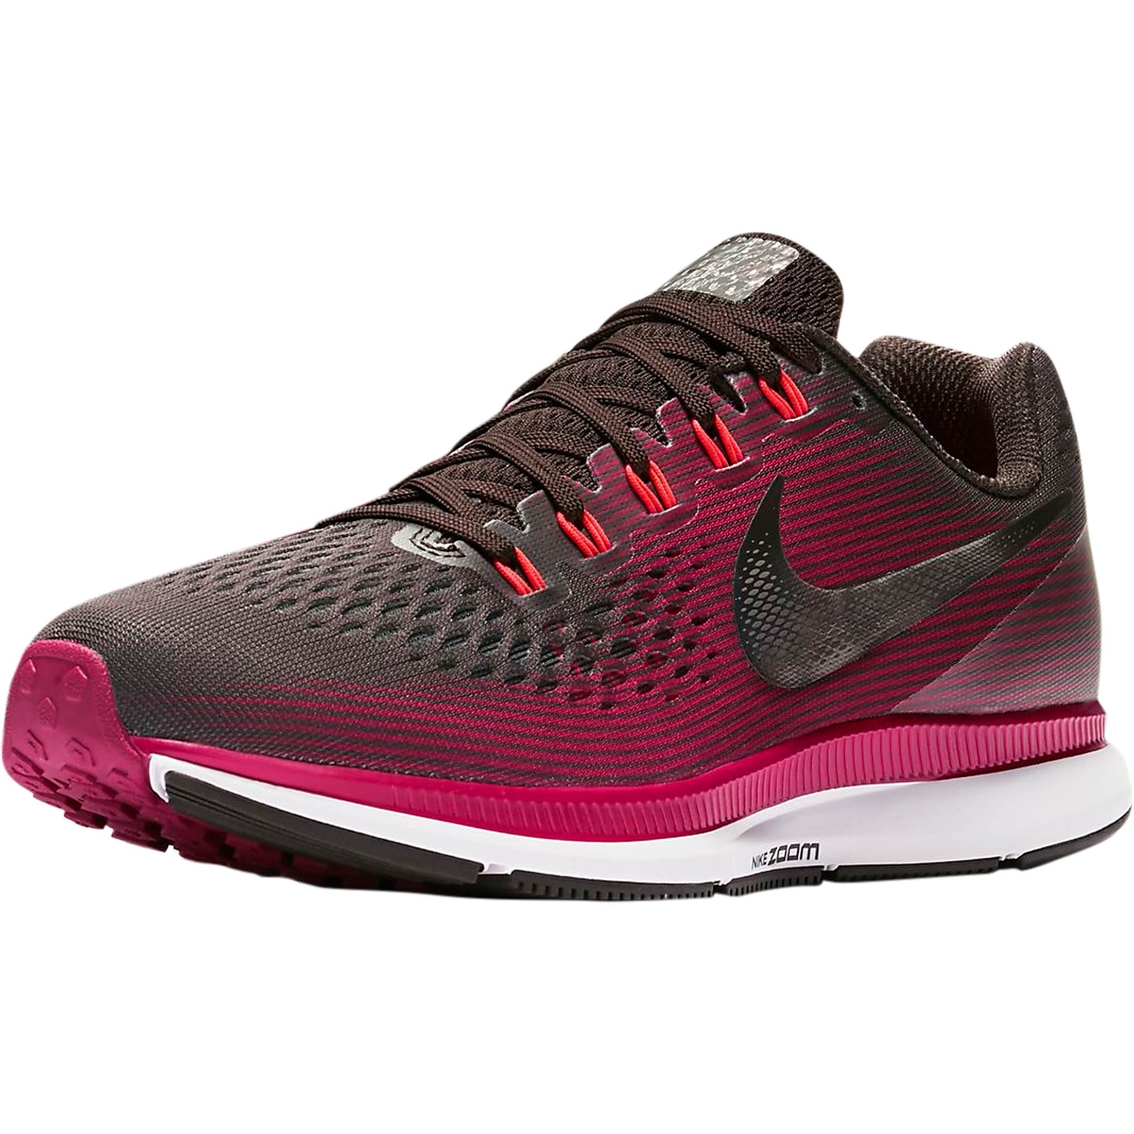 Nike Women's Air Zoom Pegasus 34 Gem Running Shoes | Running | Shoes ...